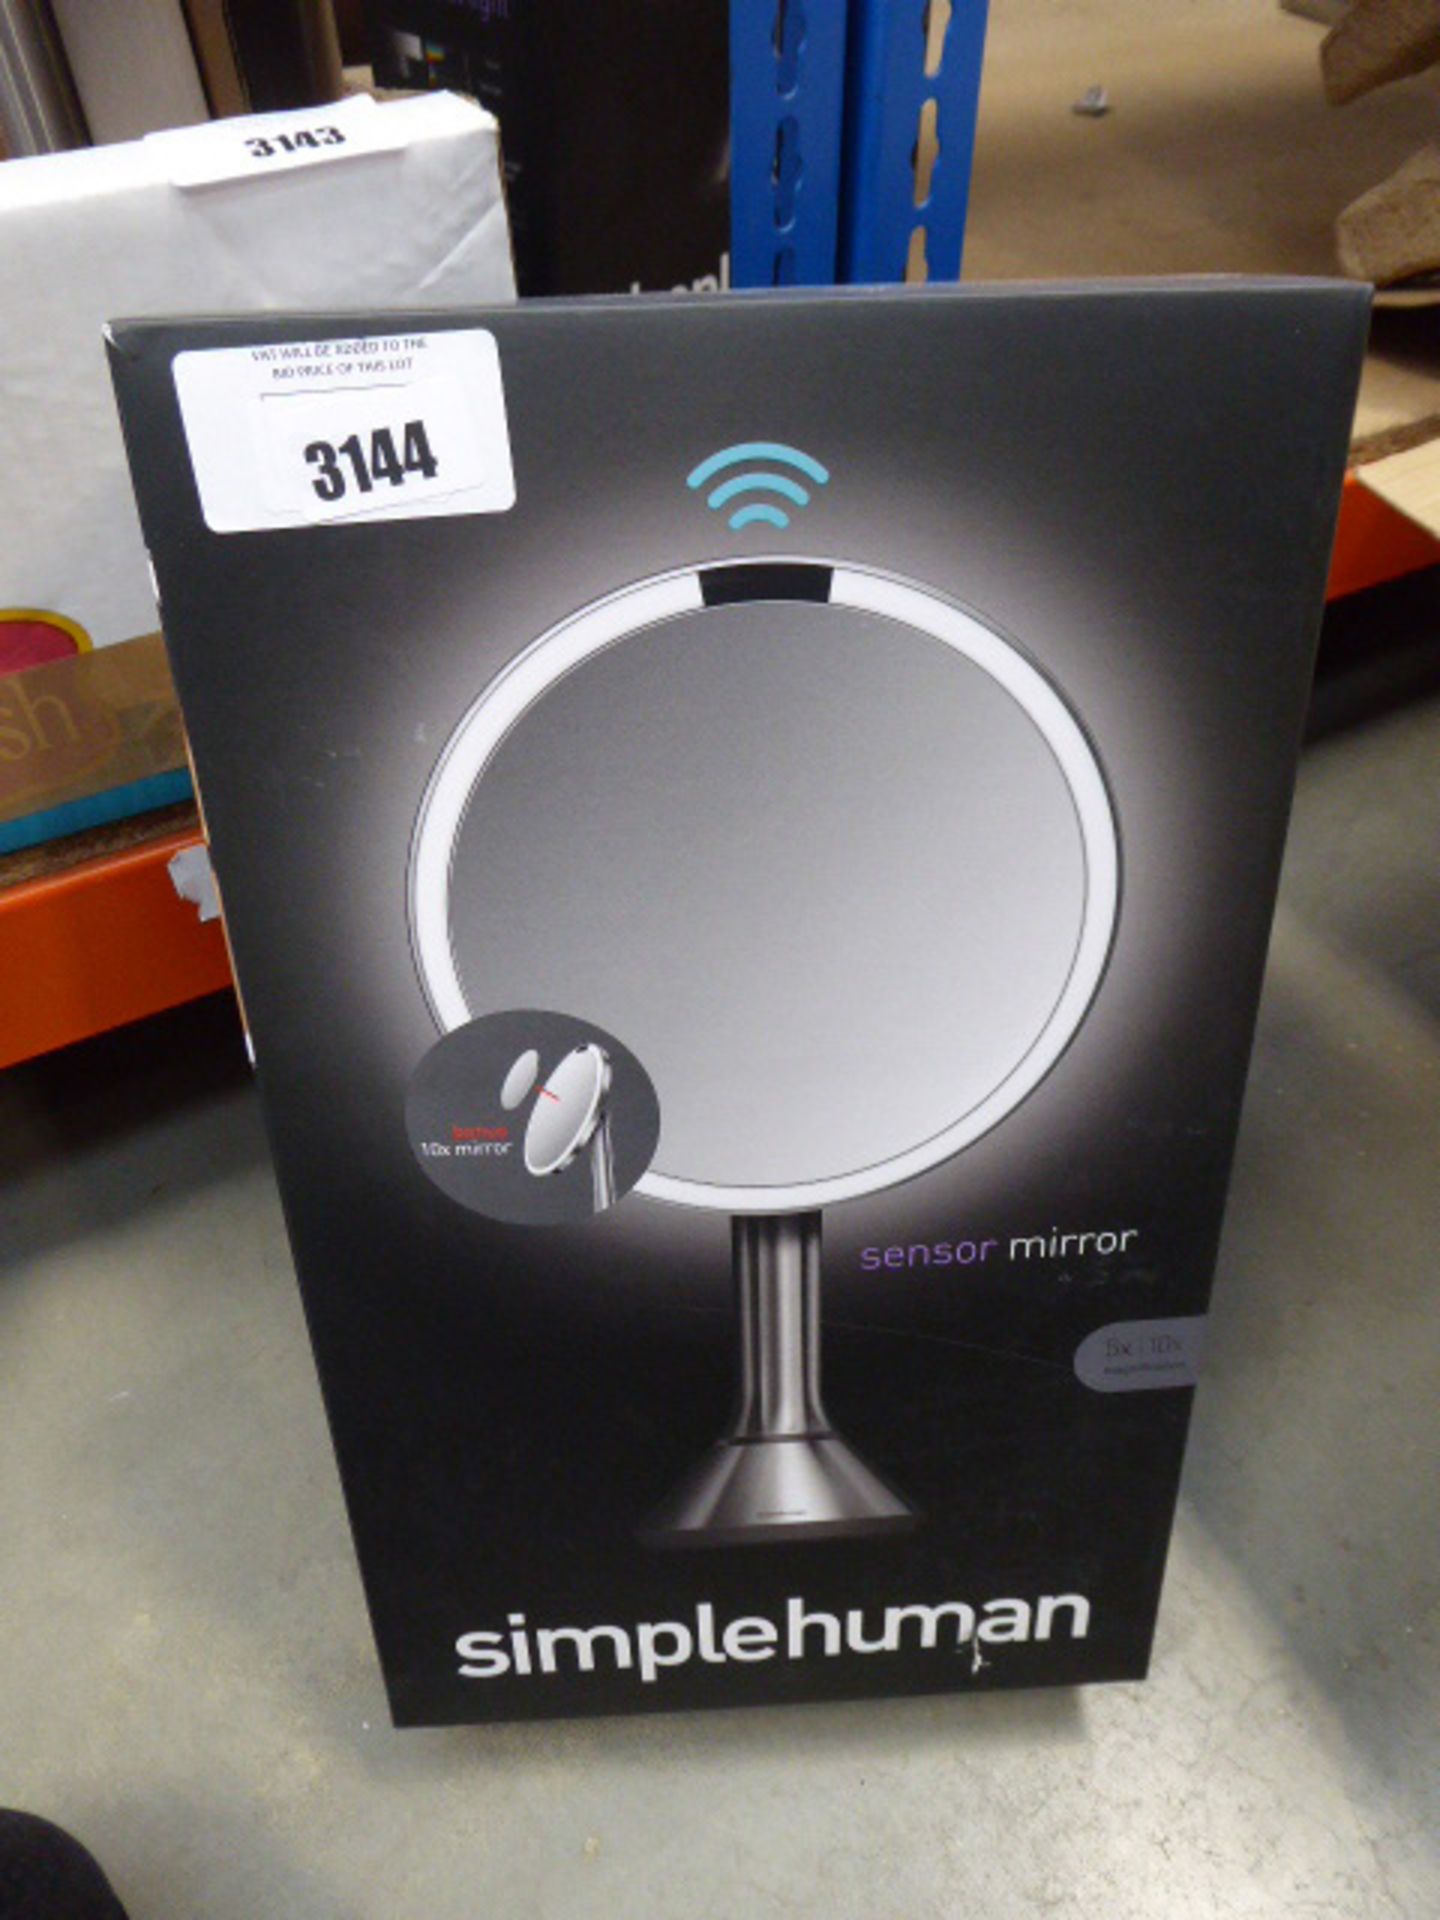 3145 Boxed Simple Human sensor mirror